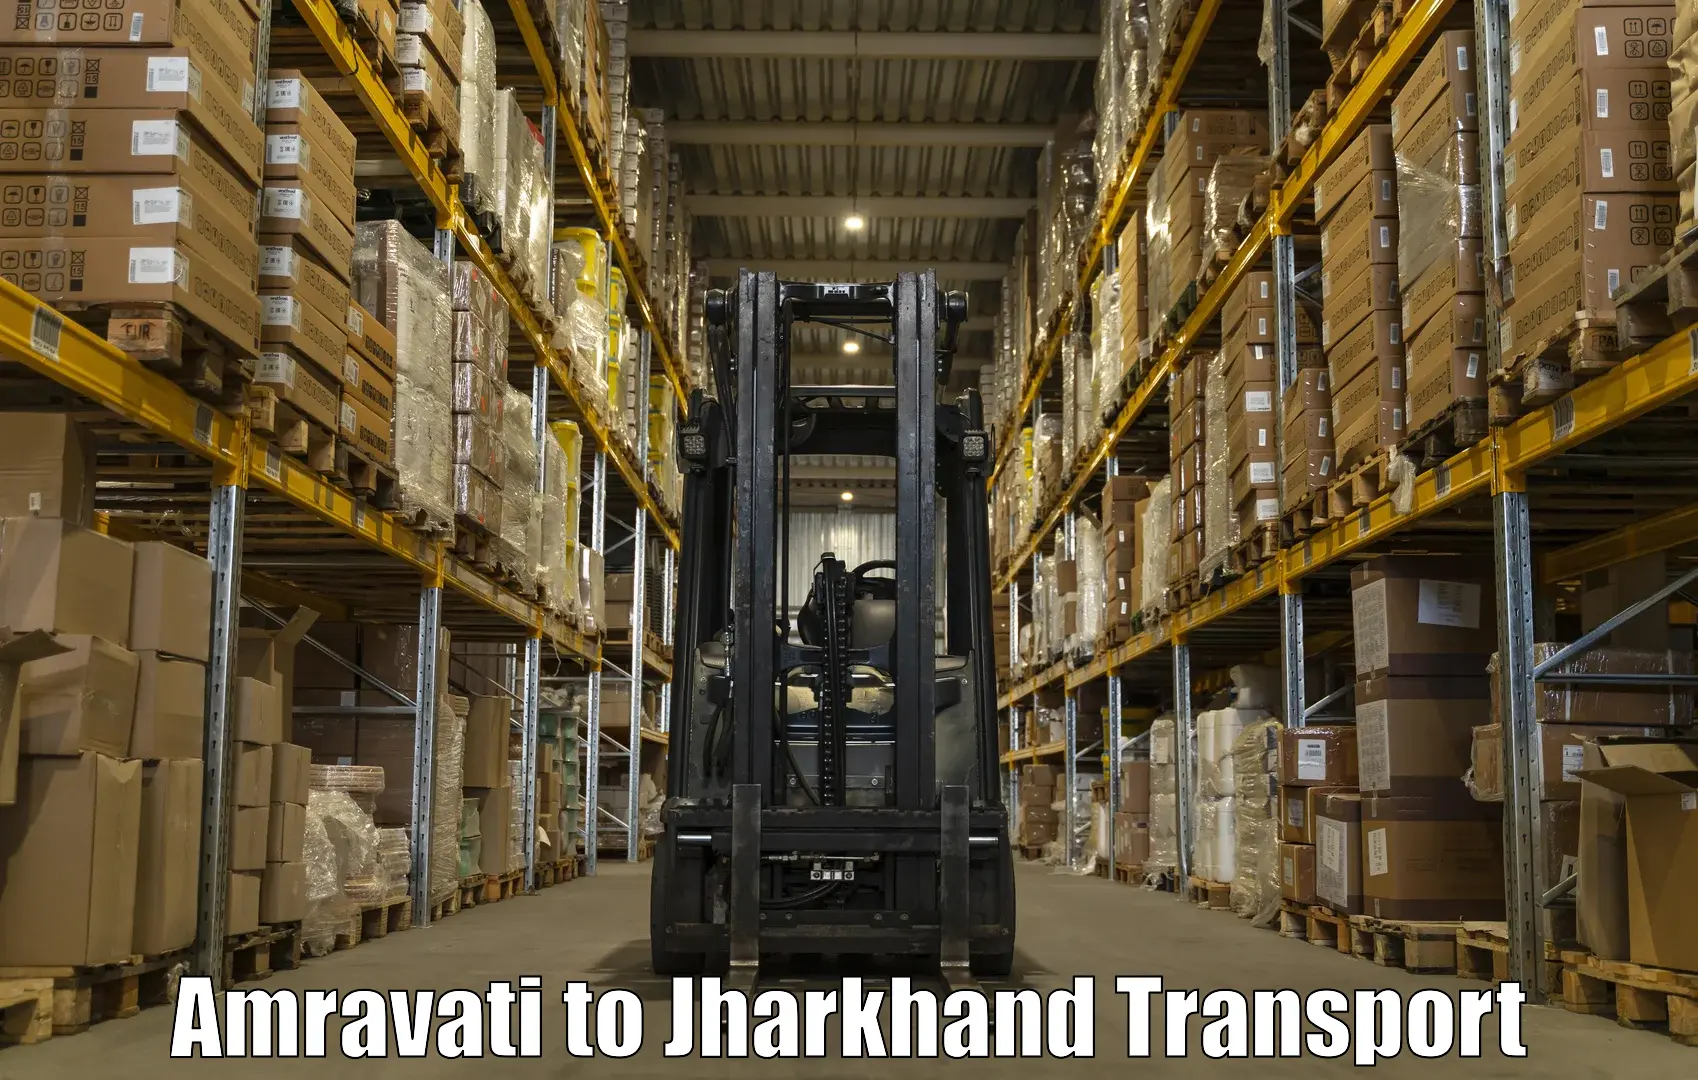 Truck transport companies in India Amravati to Jamshedpur